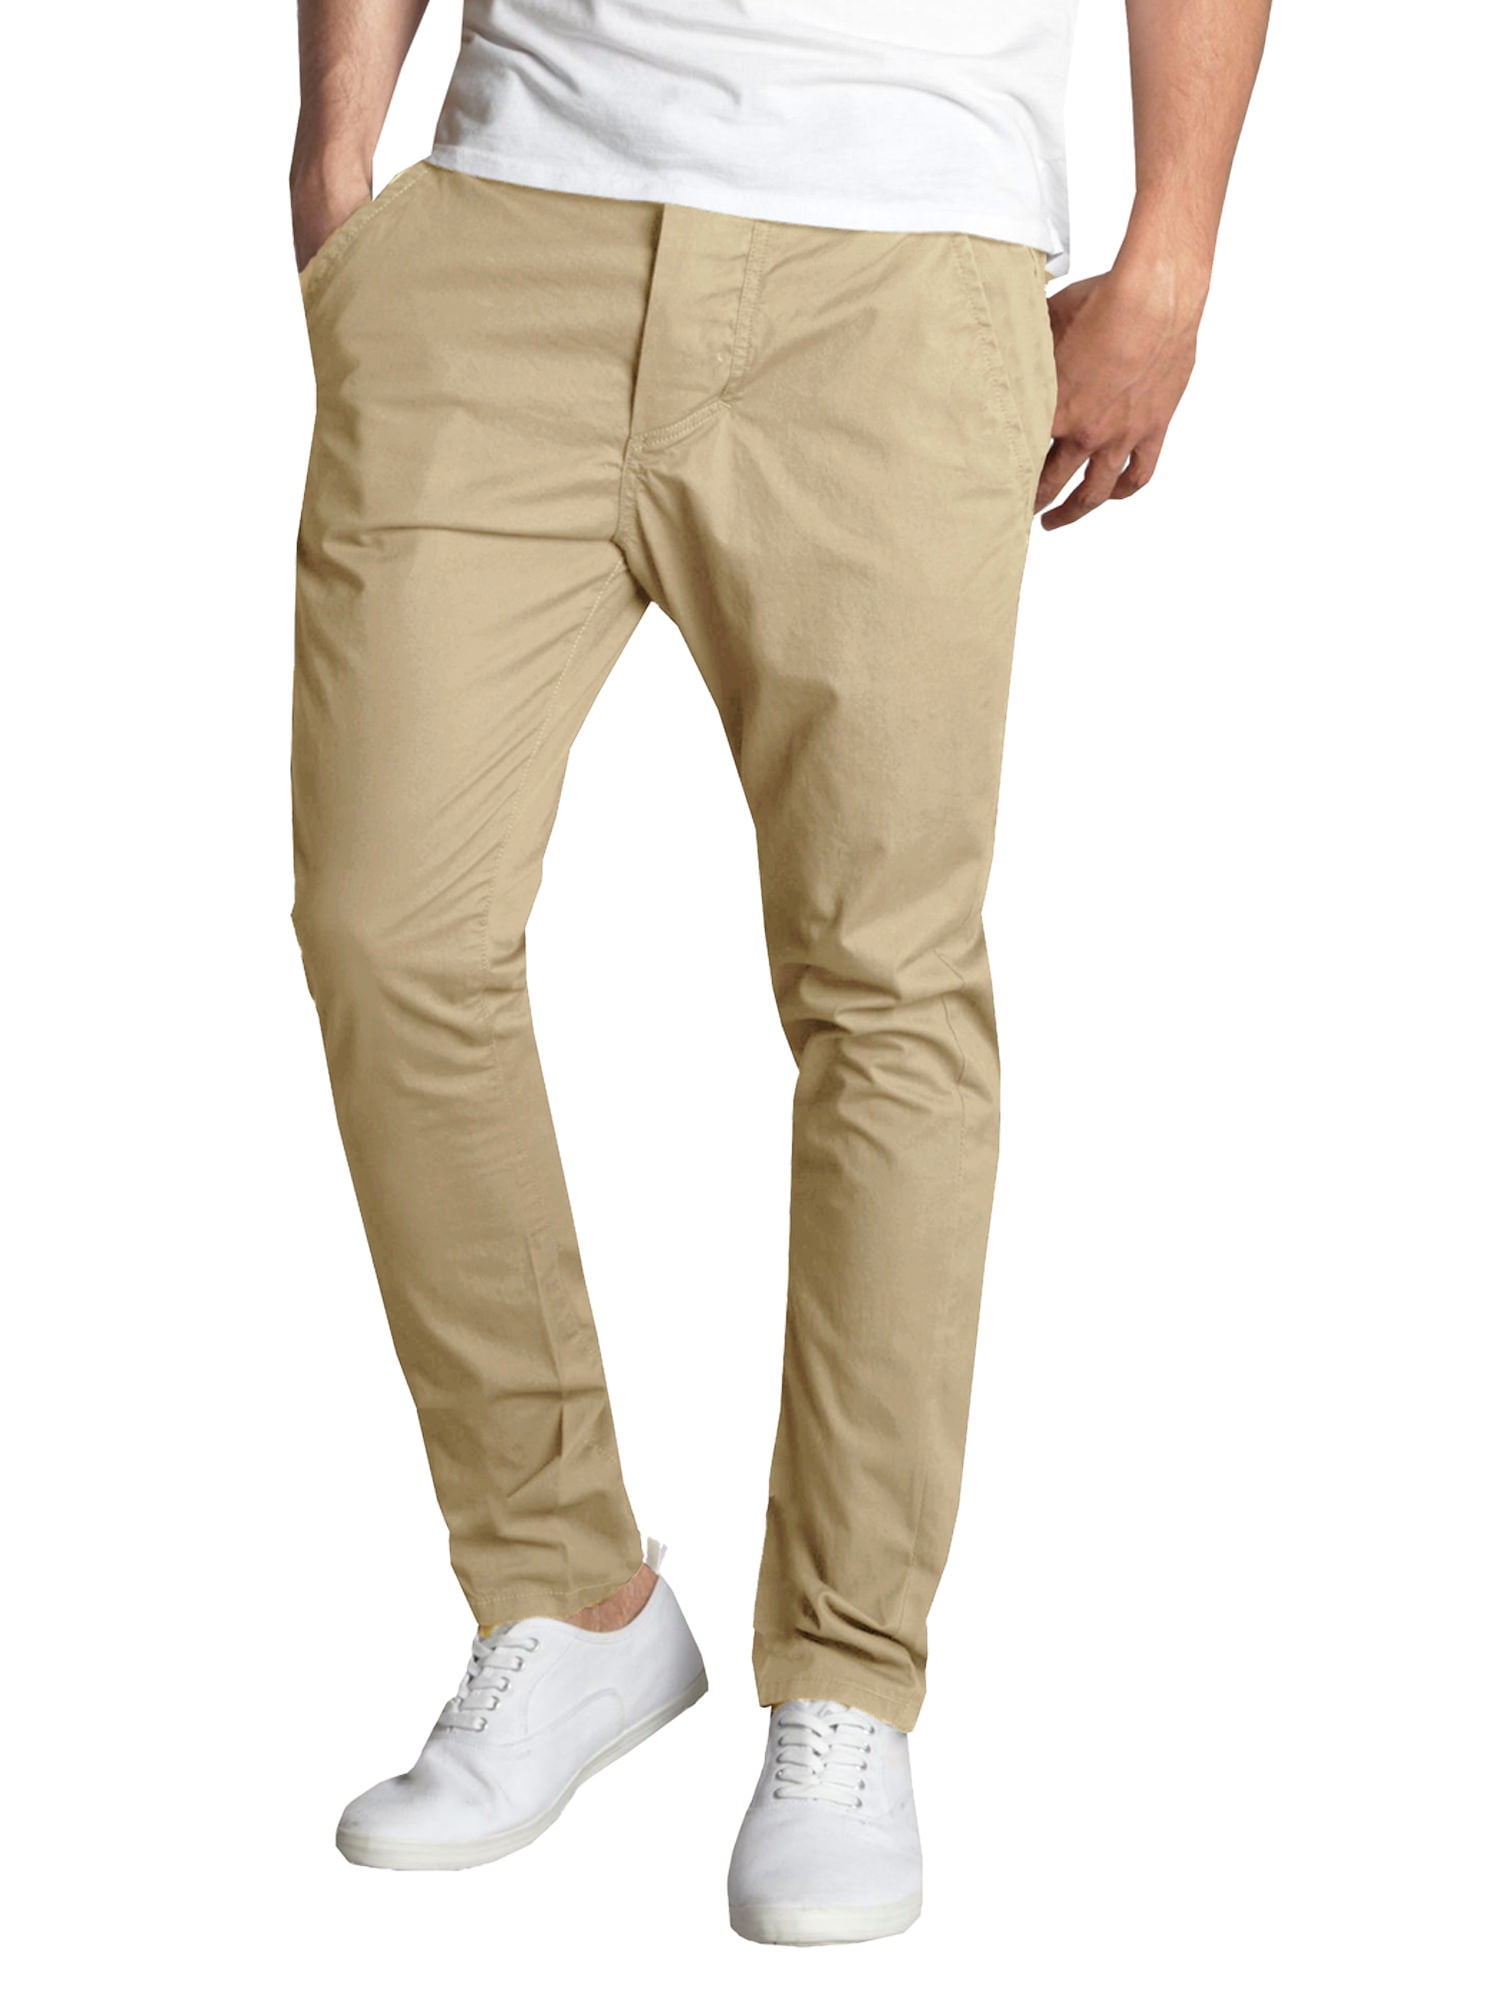 GBH - Mens Cotton Chino Pants Slim Fit Casual Stretch - Walmart.com